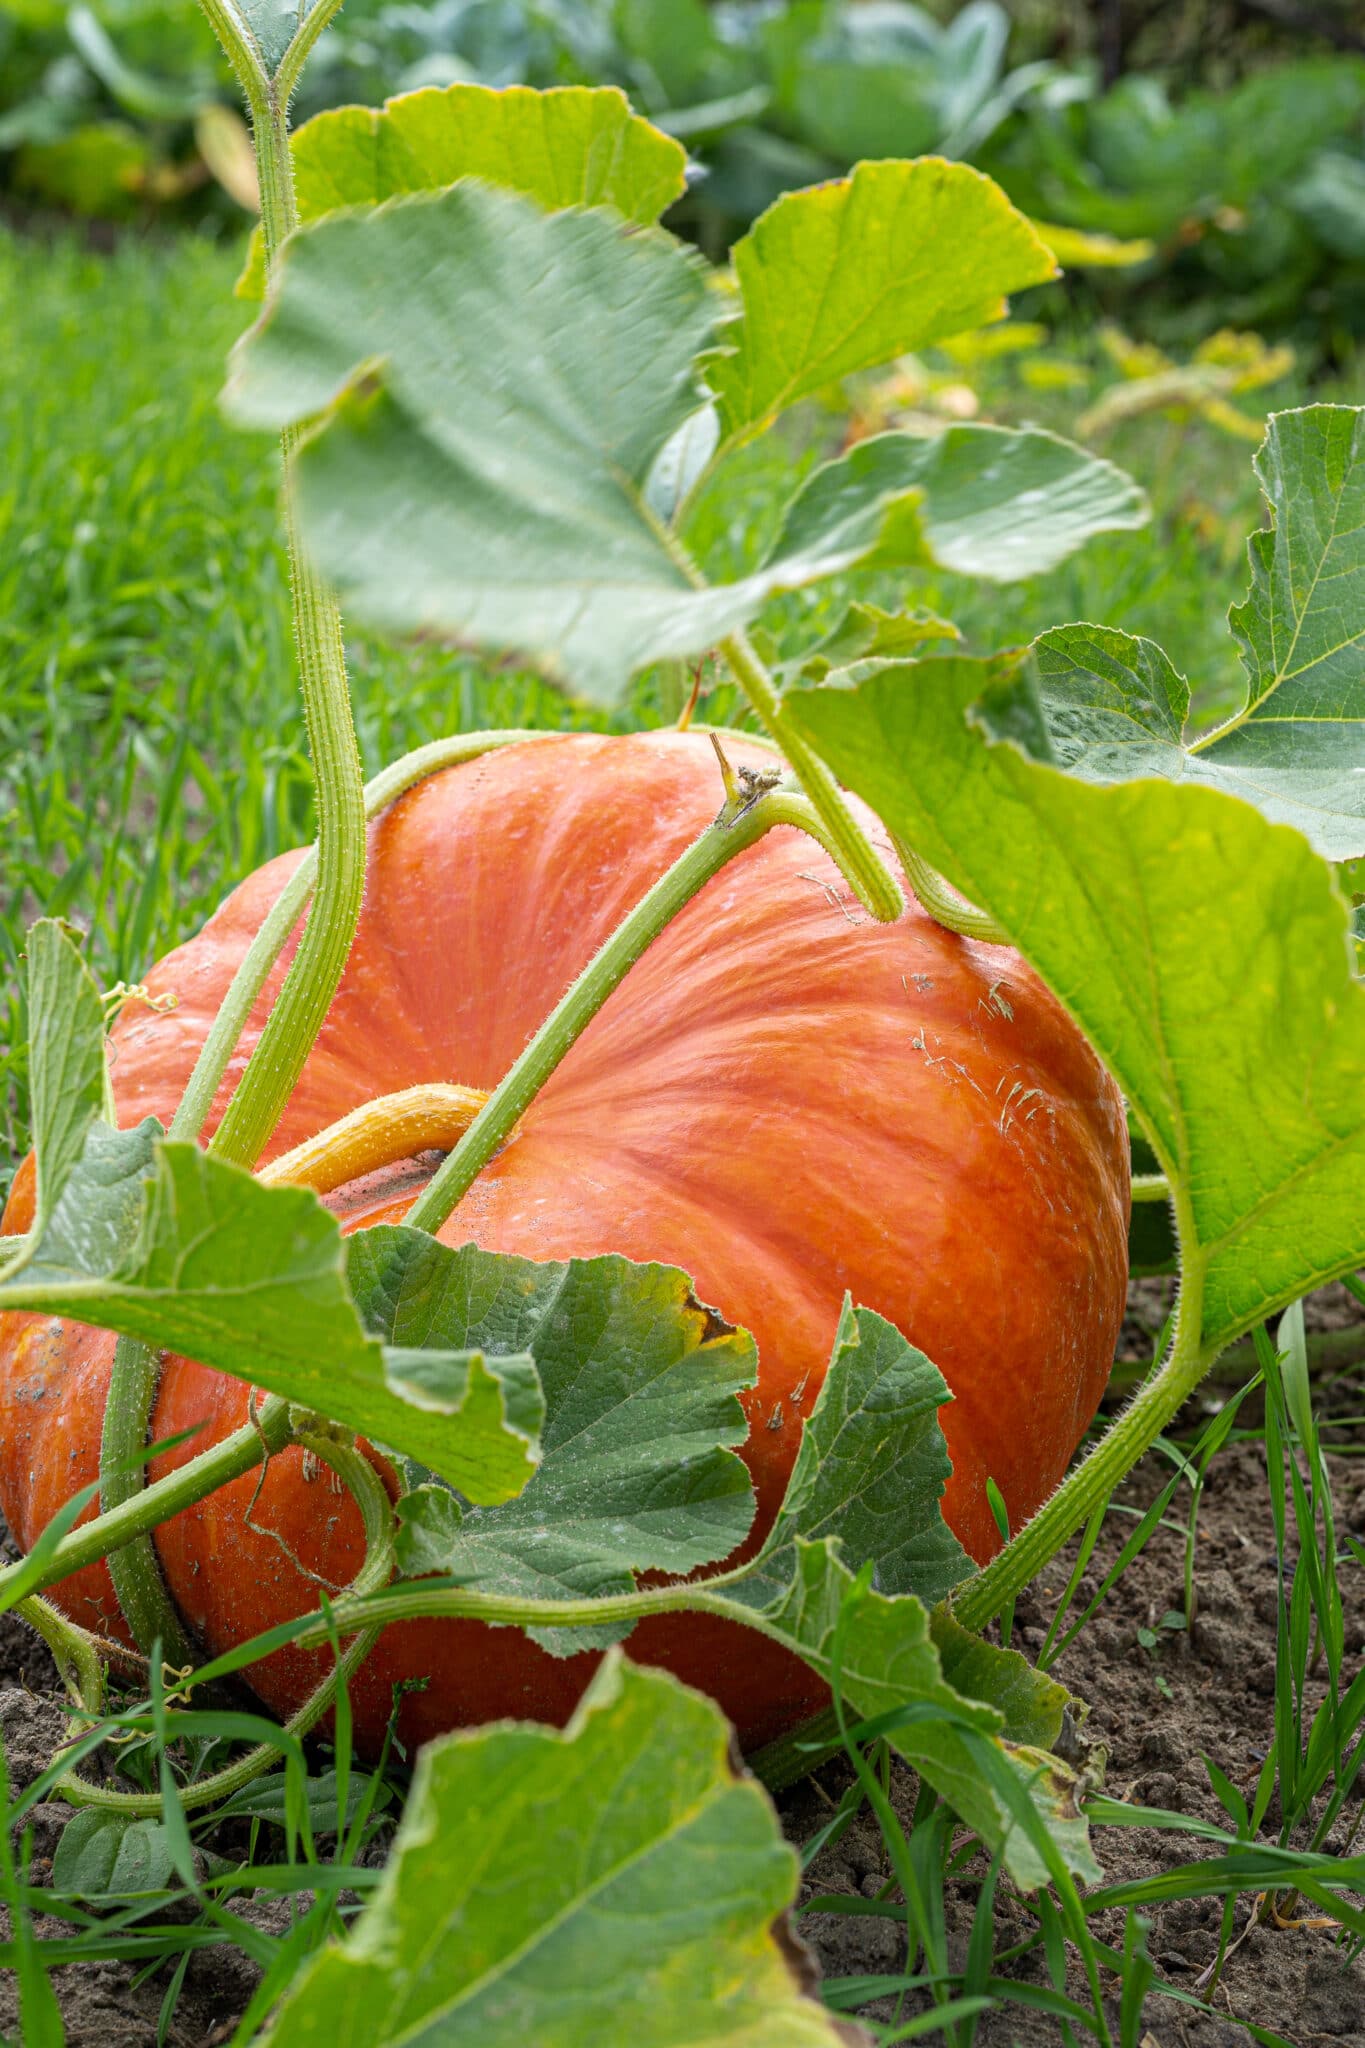 How to Grow Pumpkin